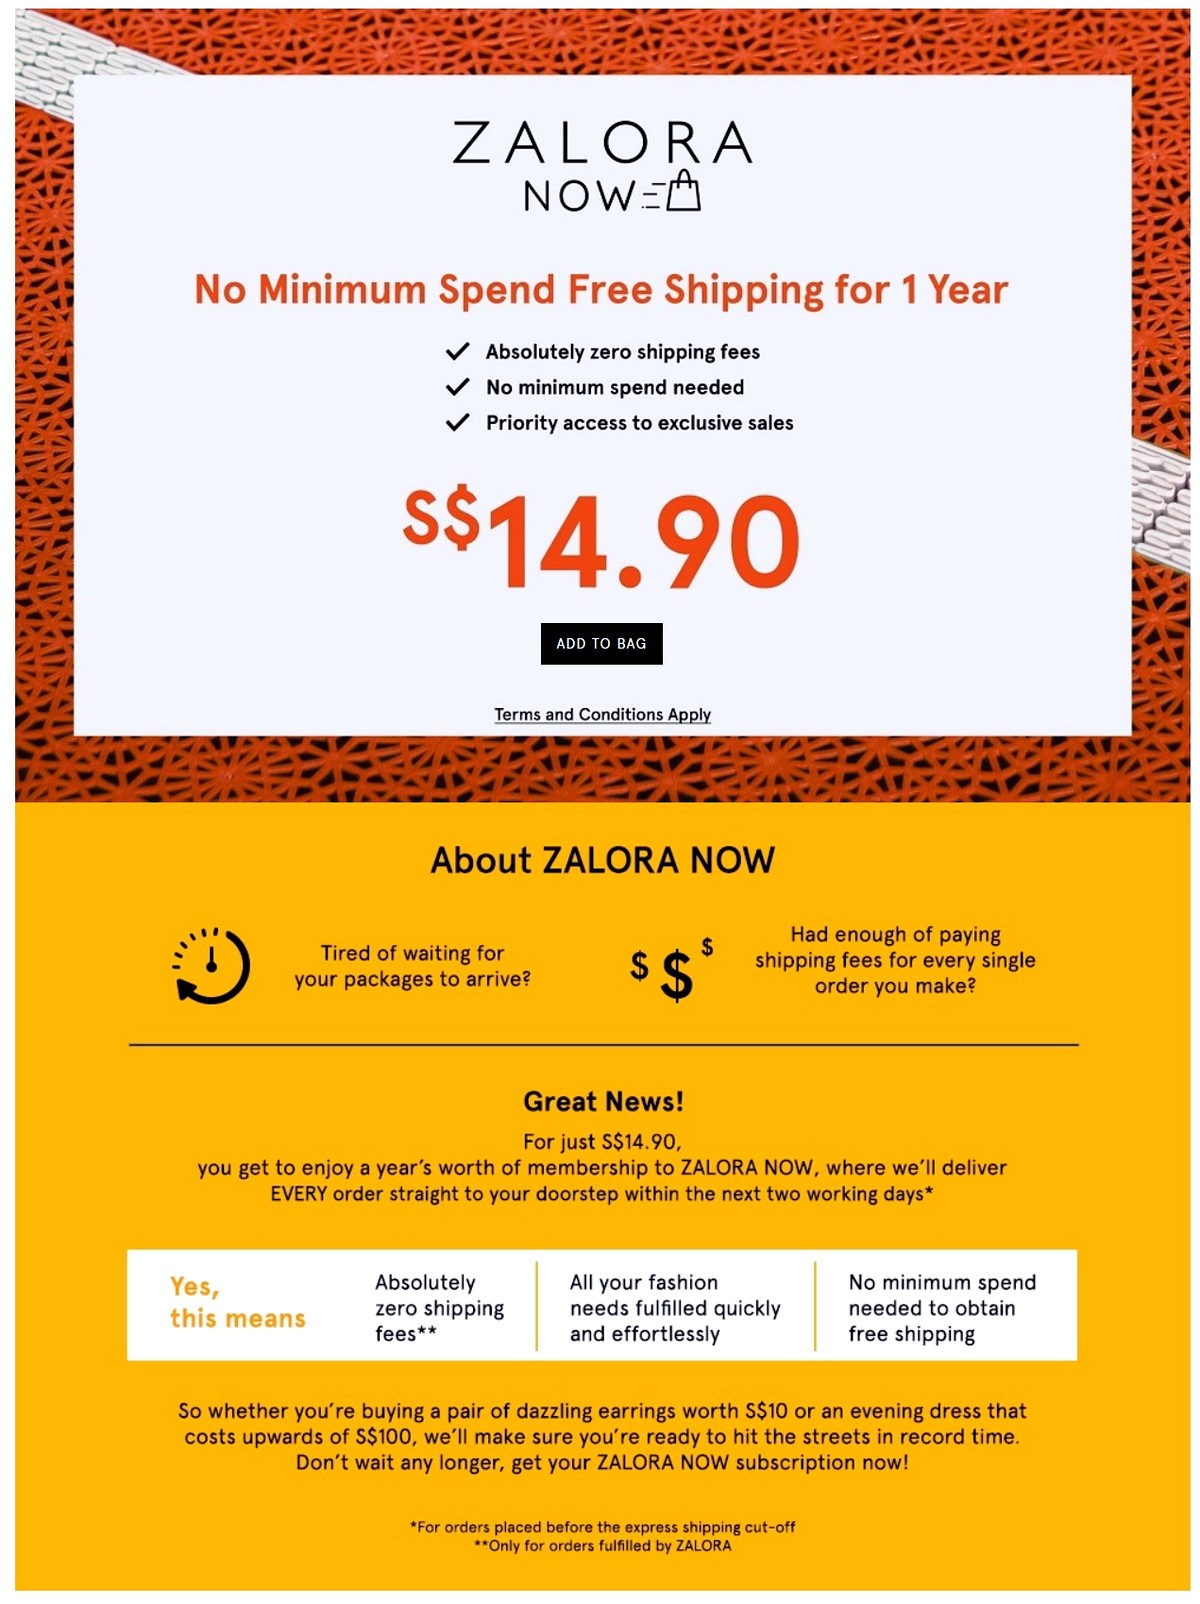 Zalora-Now-Free-Shipping 27-30 Nov 2020: 10 Online Shopping Hacks for Zalora BFCM Sale up to 80%+Extra 40% OFF